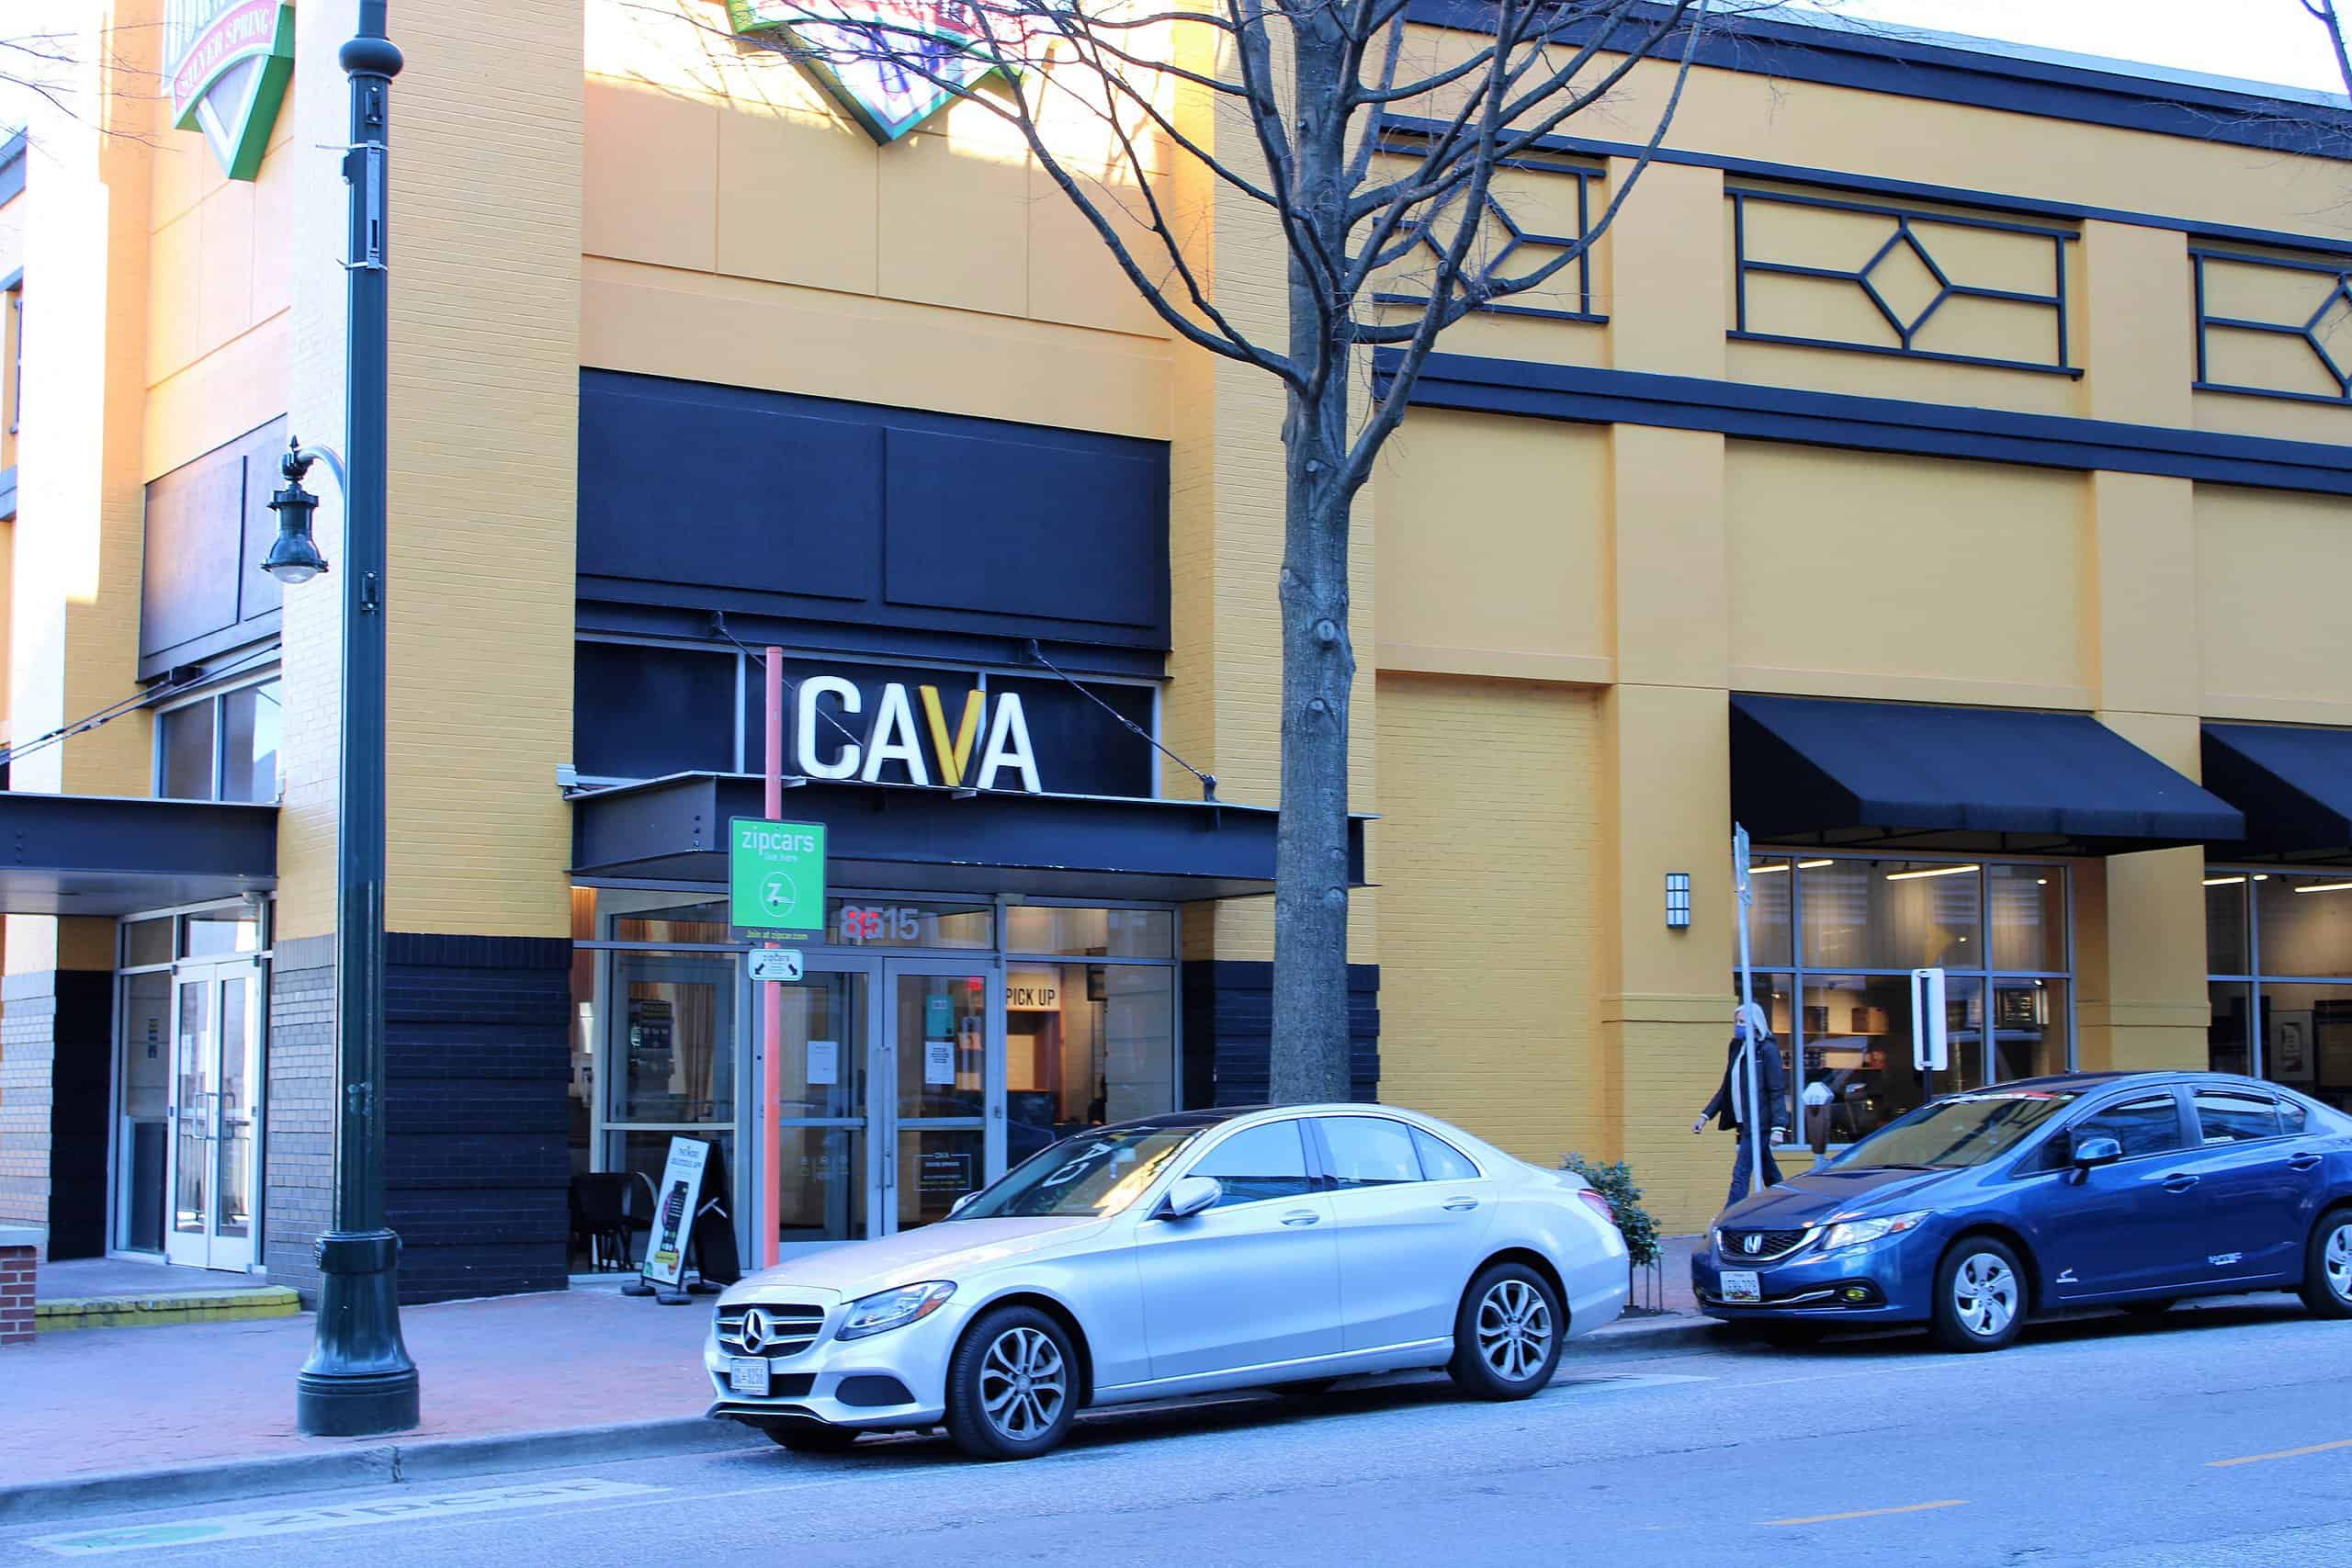 CAVA Restaurant